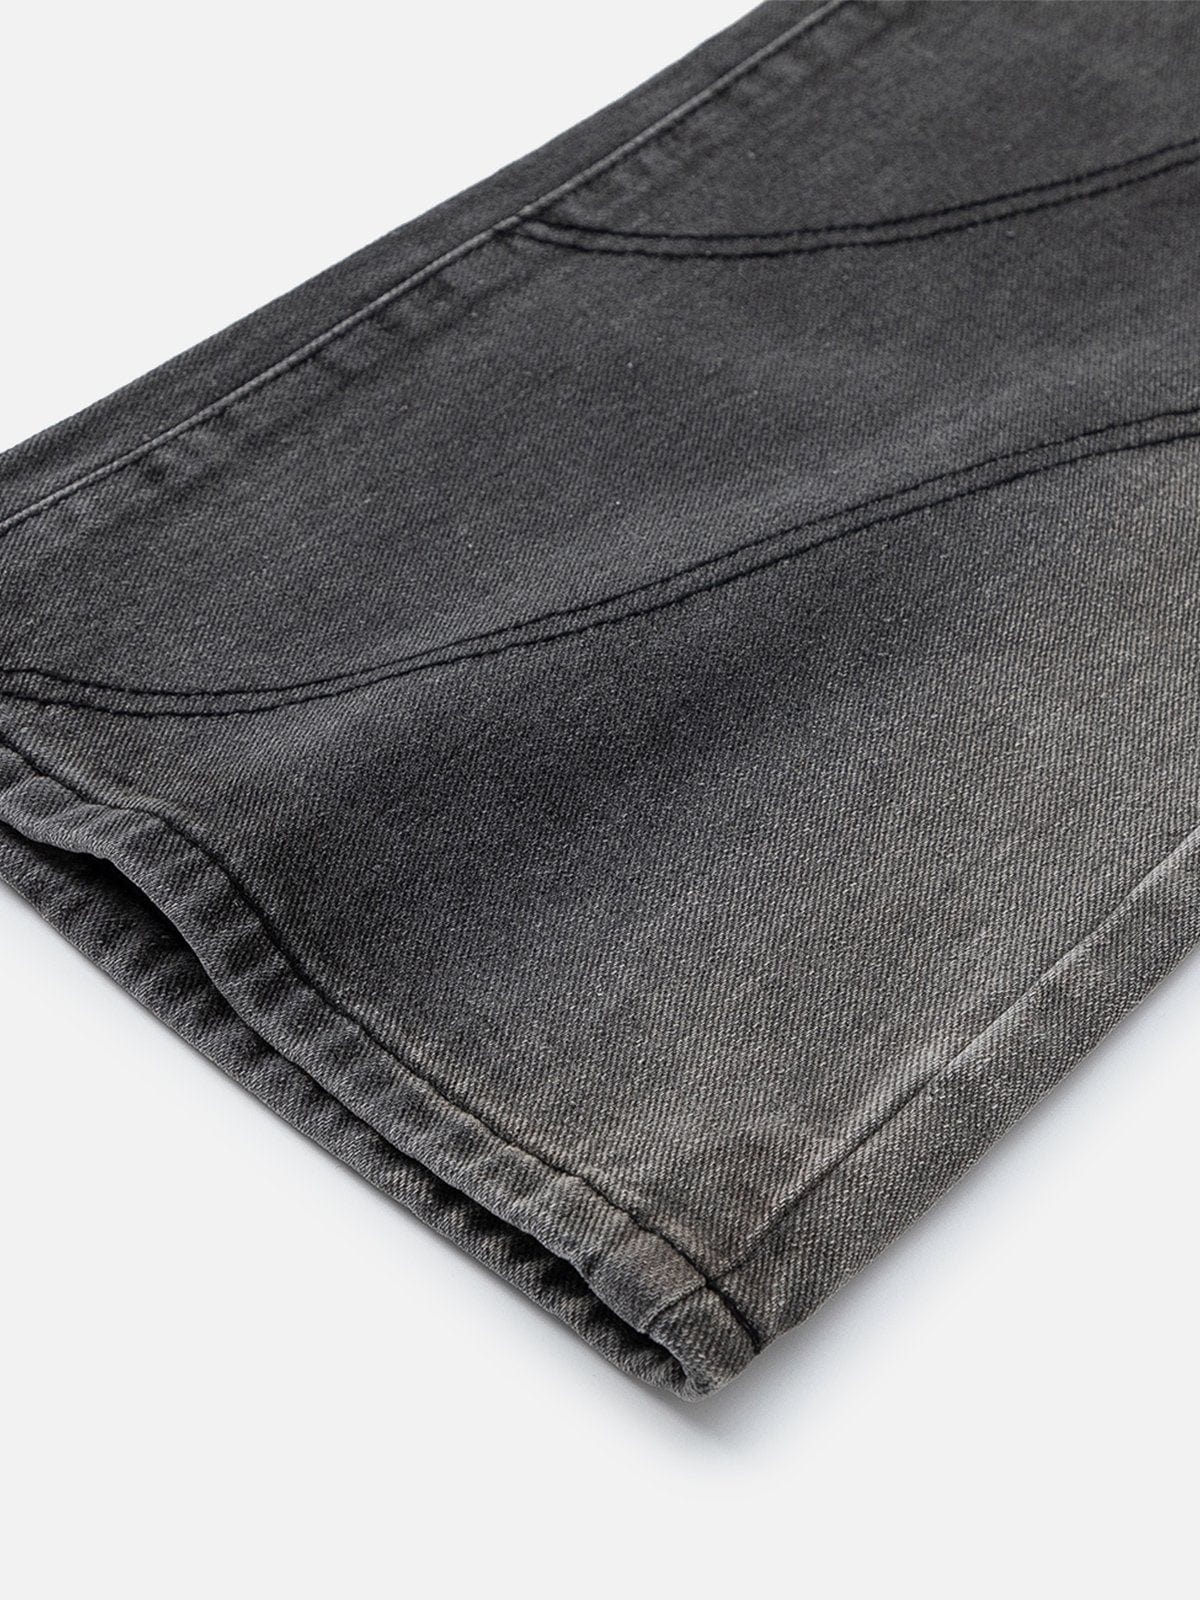 NEV Cut Fringe Washed Jeans